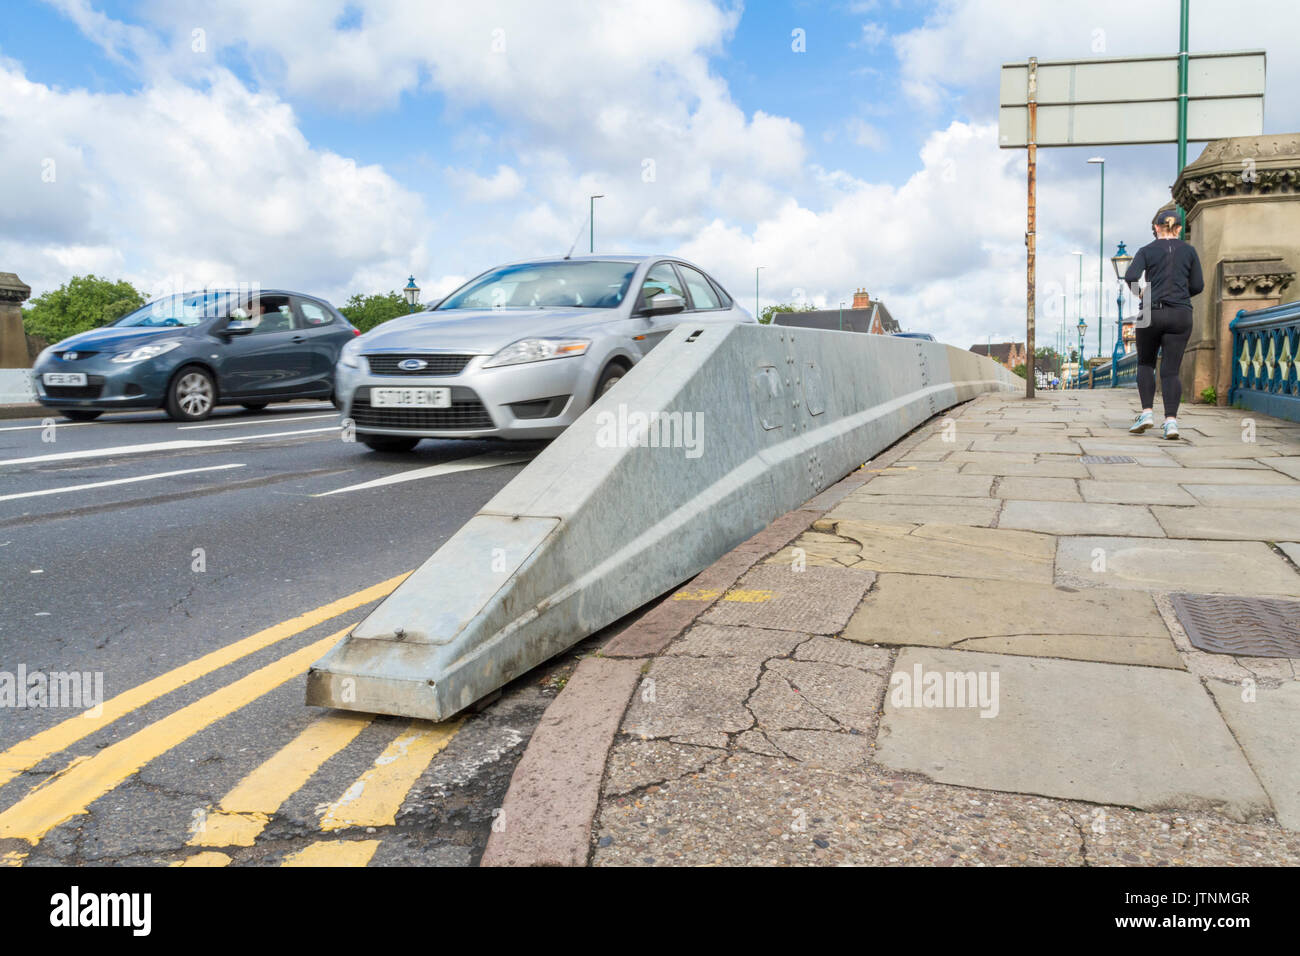 Anti-terrorism barrier. Anti-terrorist security barriers installed on Trent Bridge, Nottingham, England, UK Stock Photo